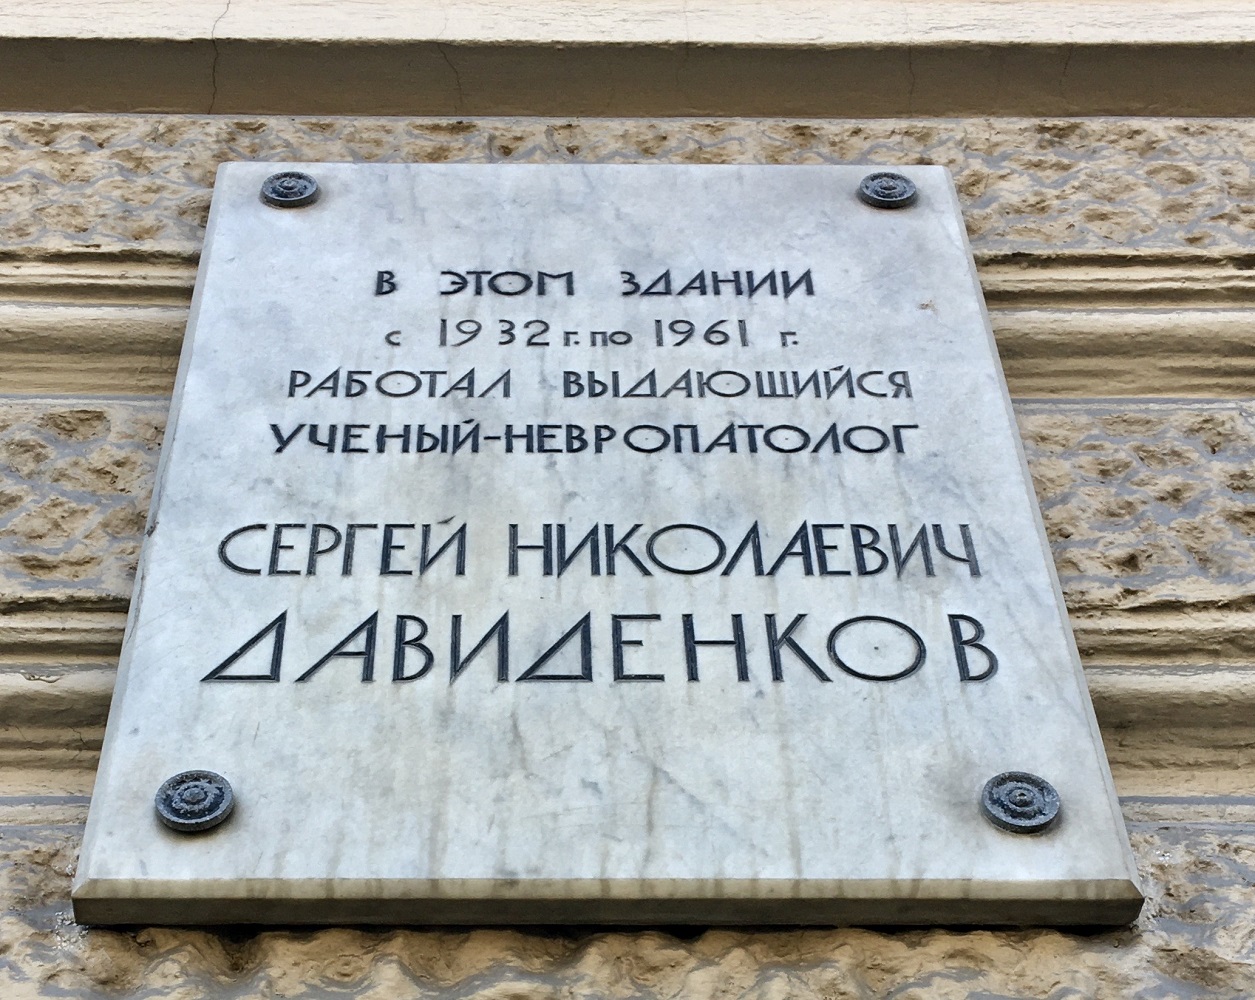 Sankt Petersburg, Кирочная улица, 41 / Парадная улица, 2. Sankt Petersburg — Memorial plaques